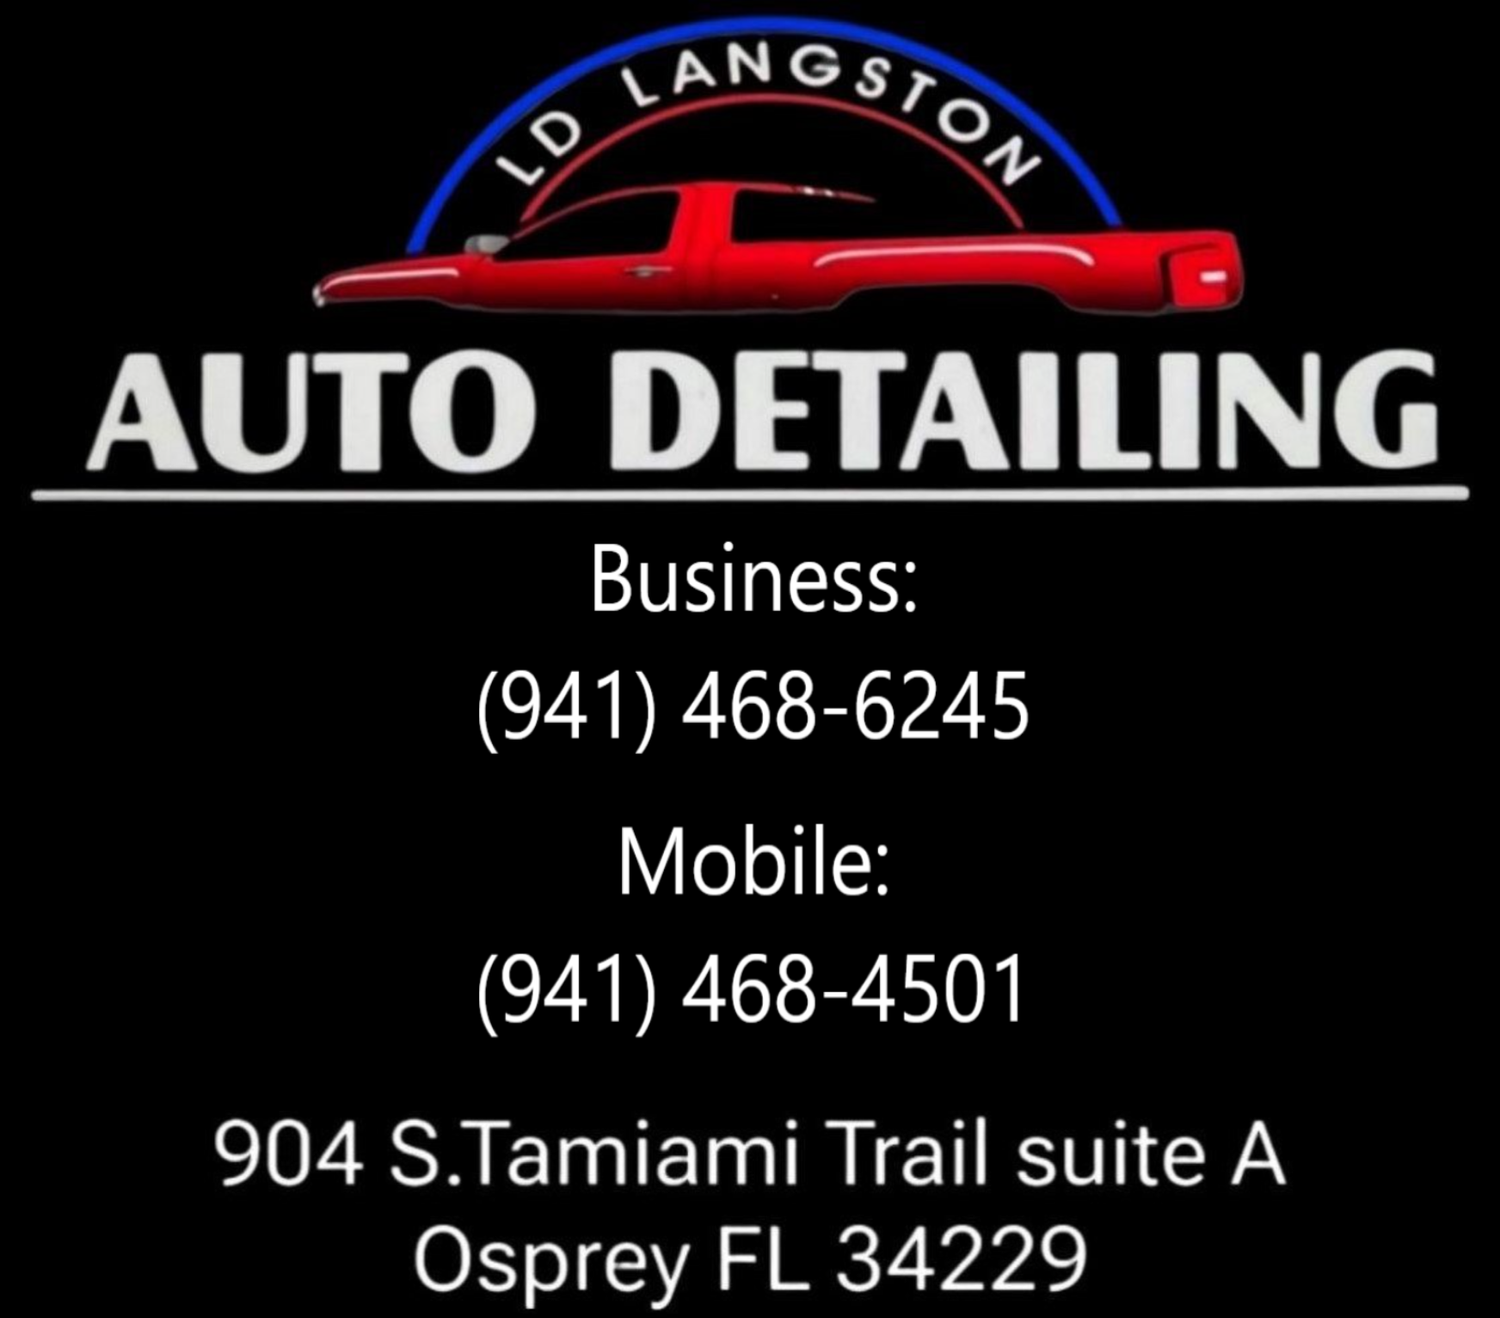 LD Langston Auto Detailing